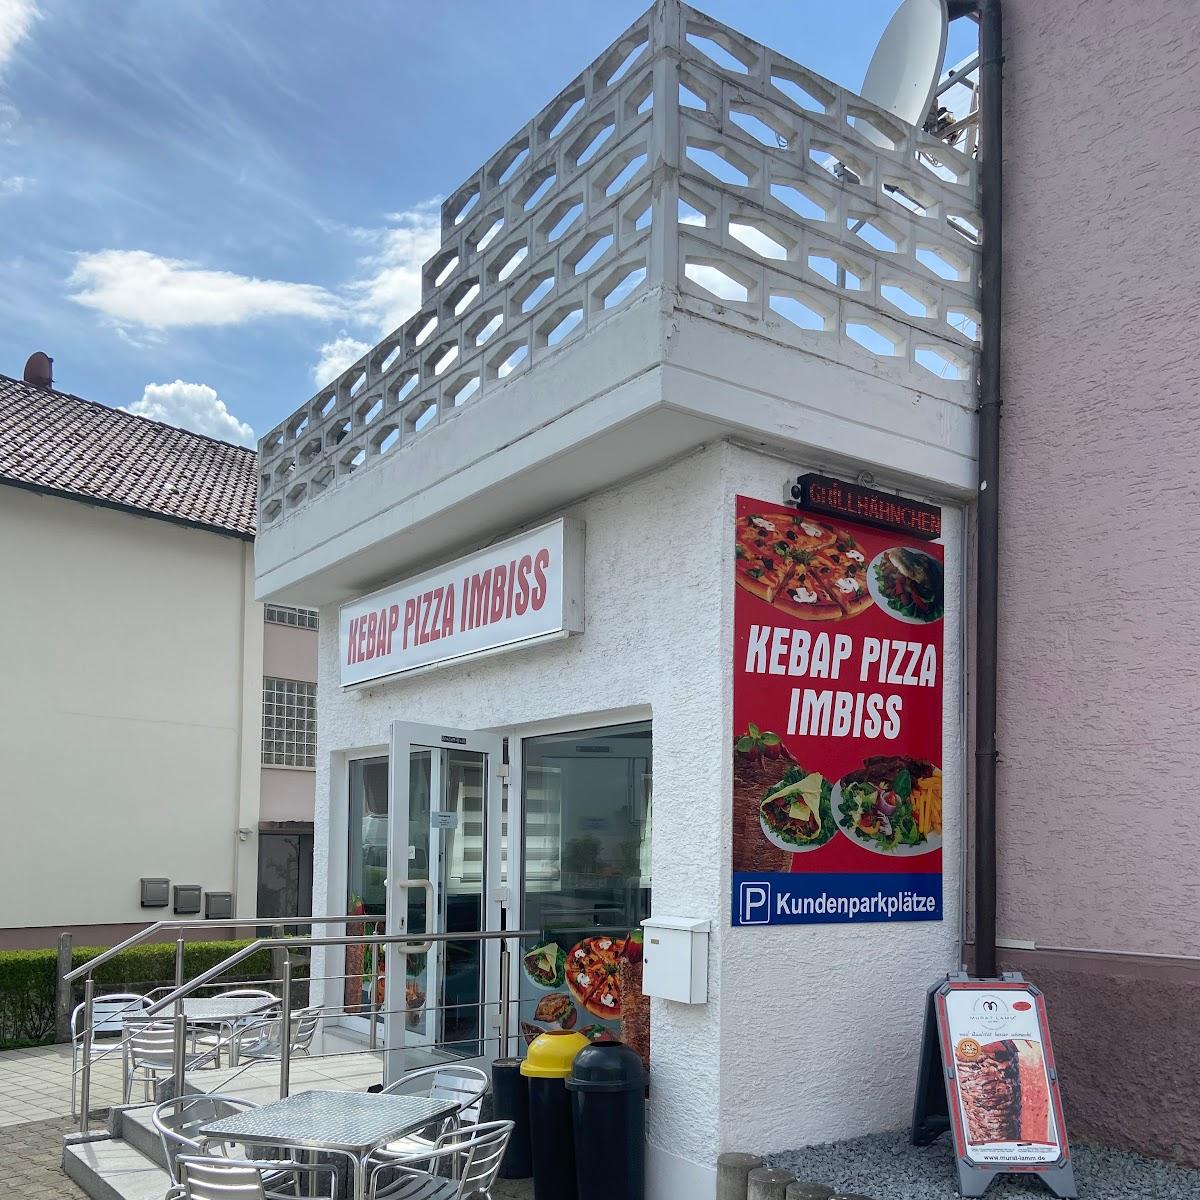 Restaurant "Kebap Pizza Imbiss" in Stockach